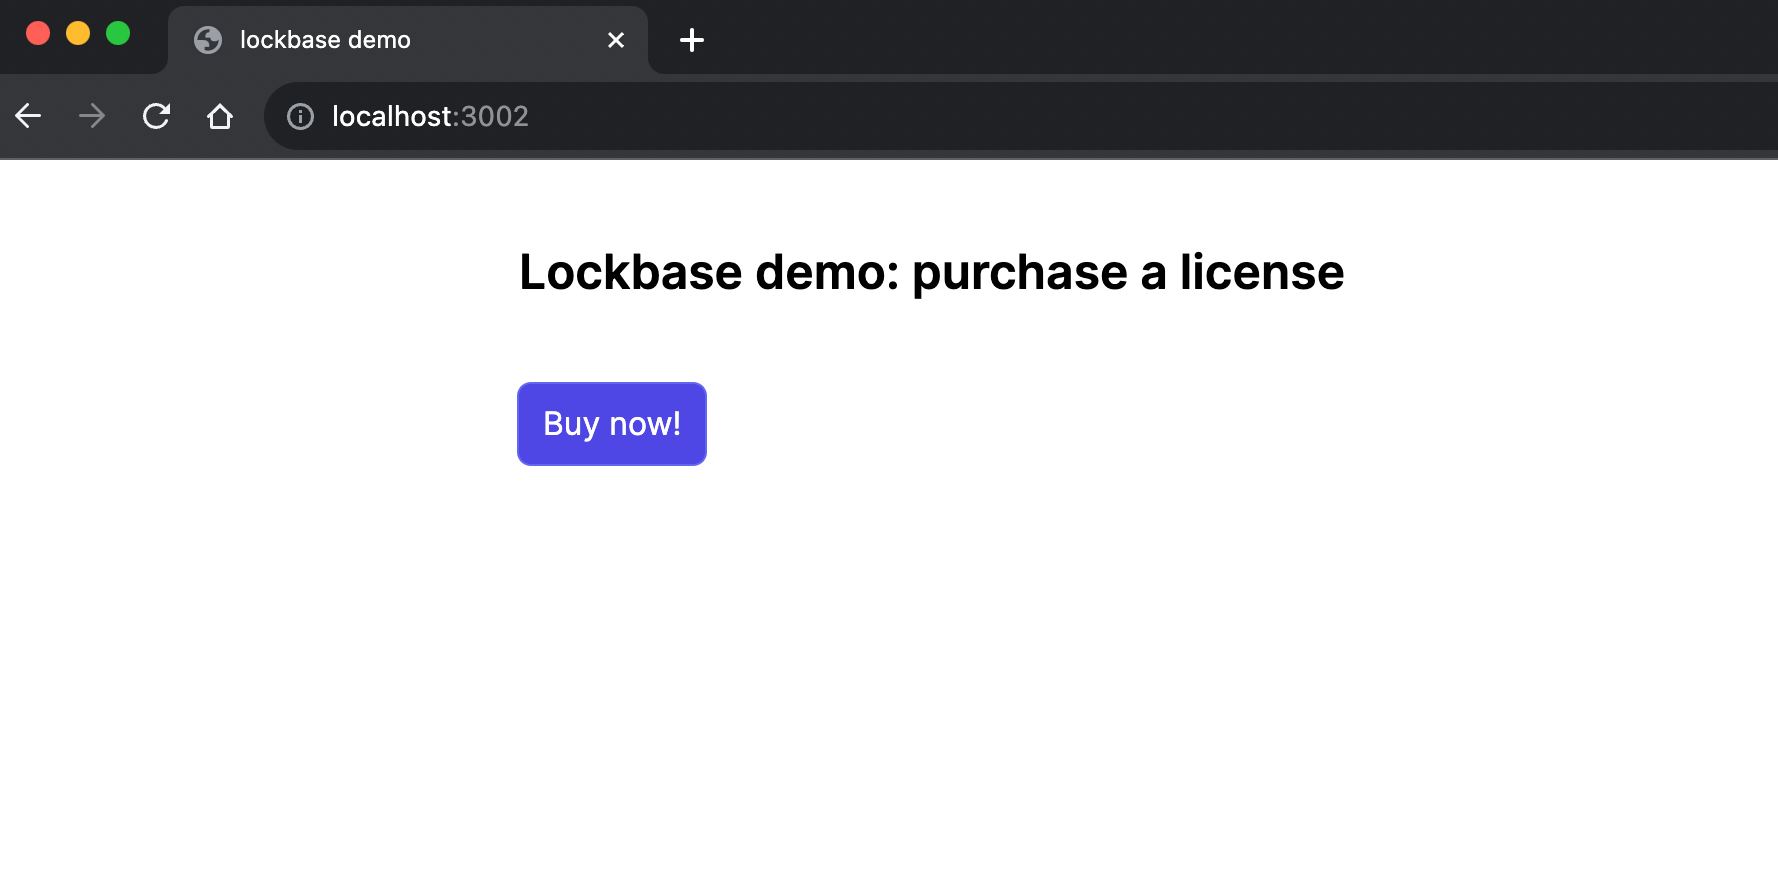 A screenshot of the Lockbase demo web application